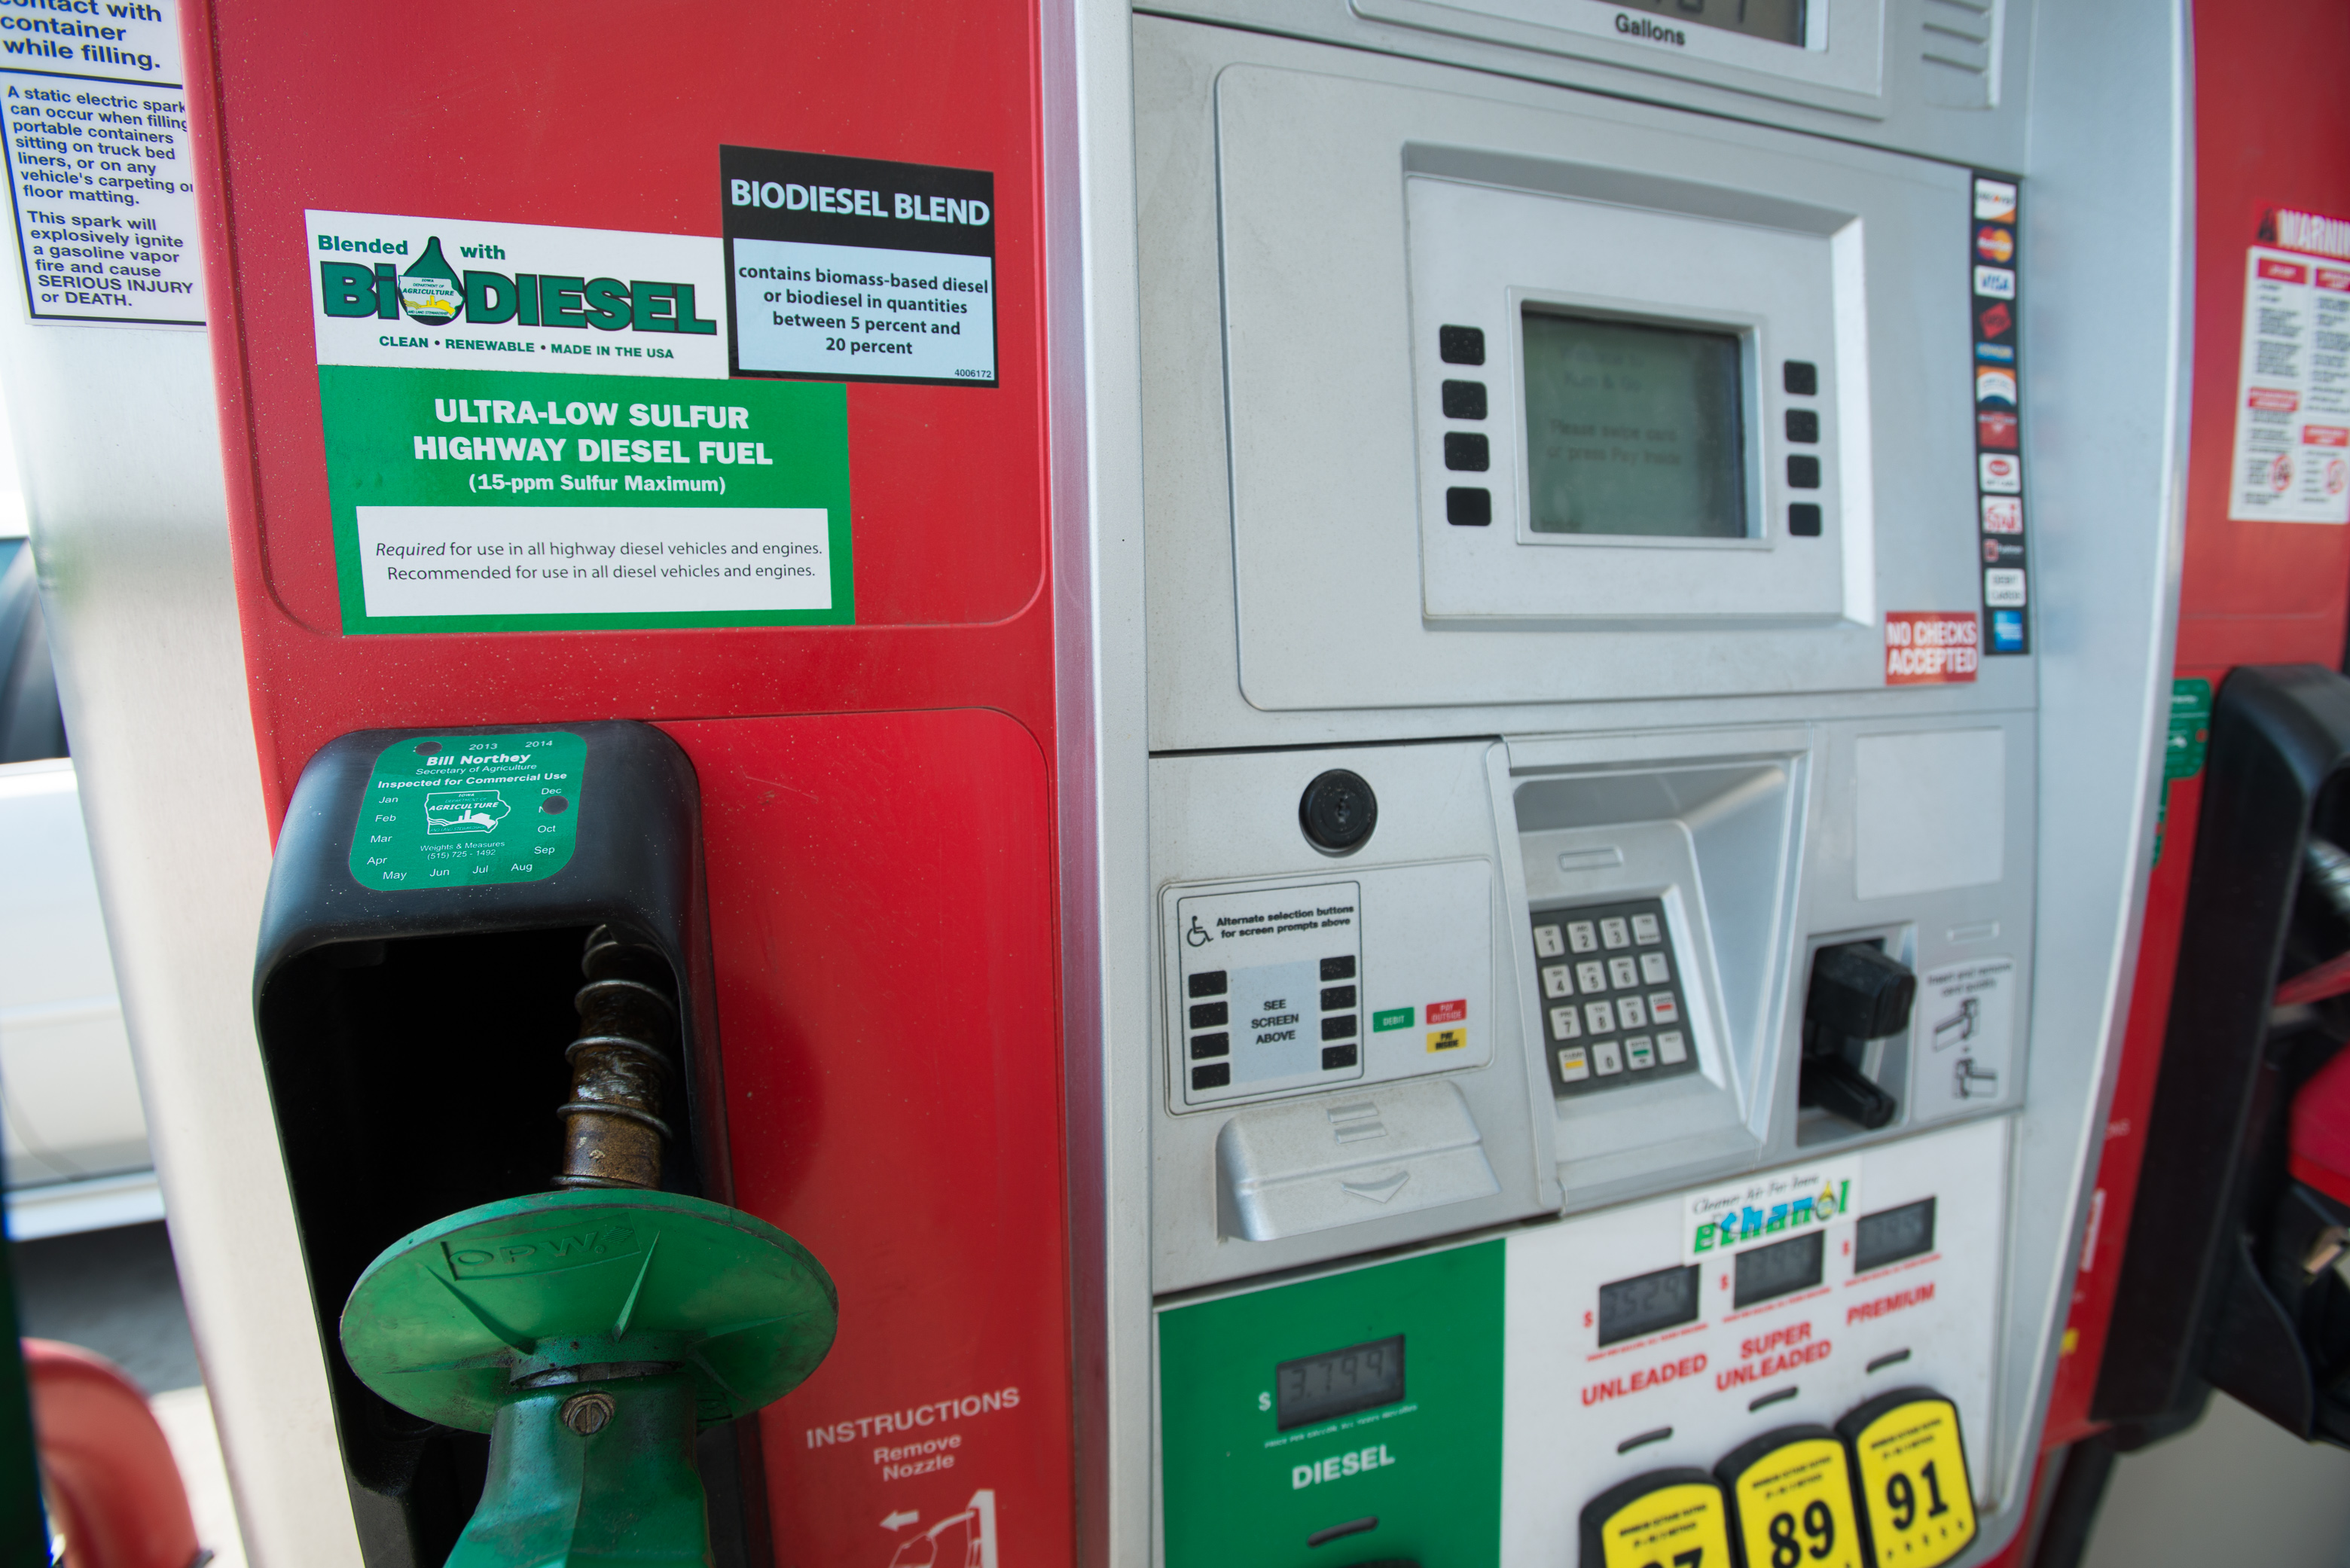 Photo: Iowa Biodiesel Board